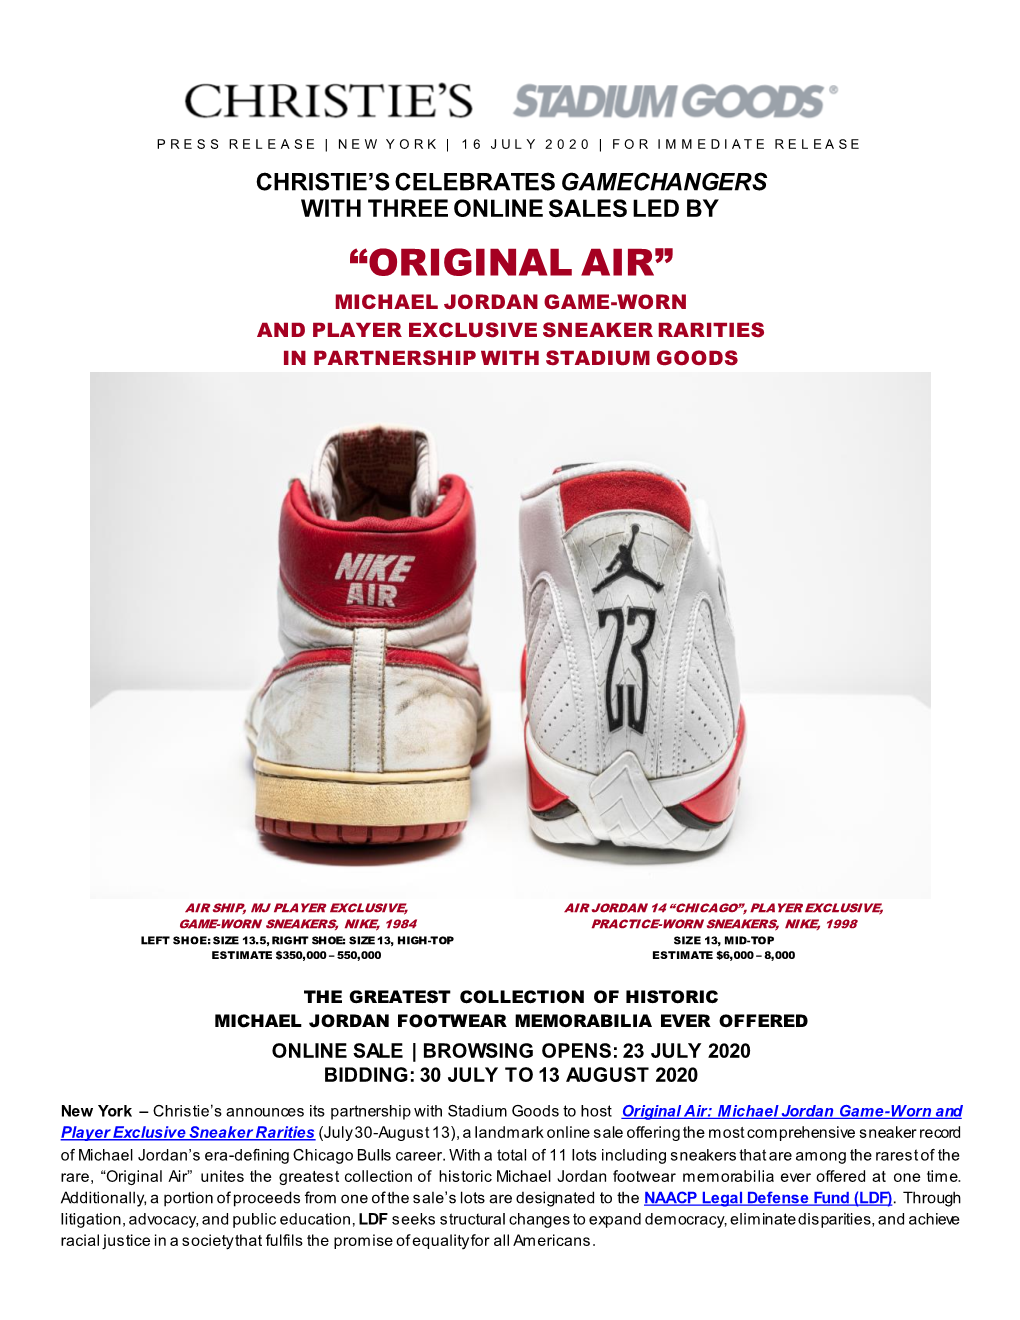 “Original Air” Michael Jordan Game-Worn and Player Exclusive Sneaker Rarities in Partnership with Stadium Goods